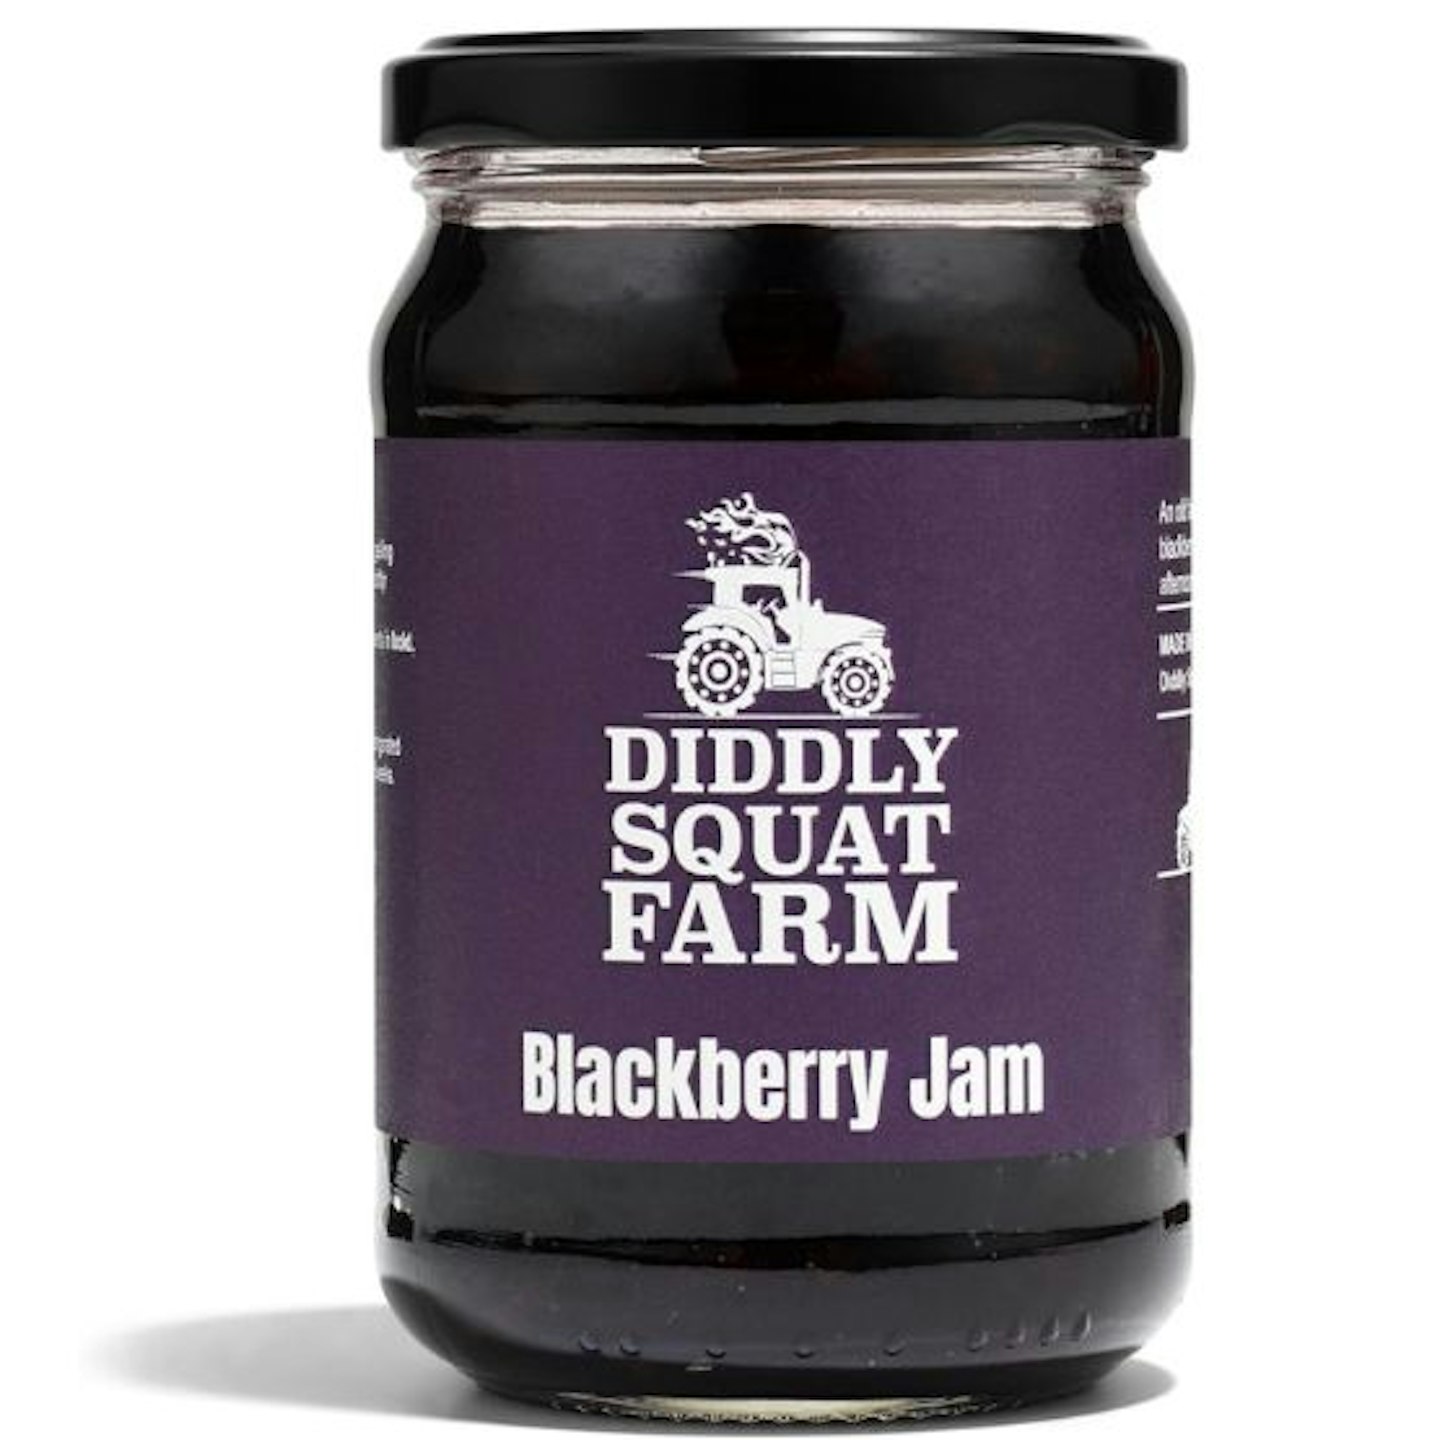 Diddly Squat Farm Blackberry Jam from Clarkson's farm